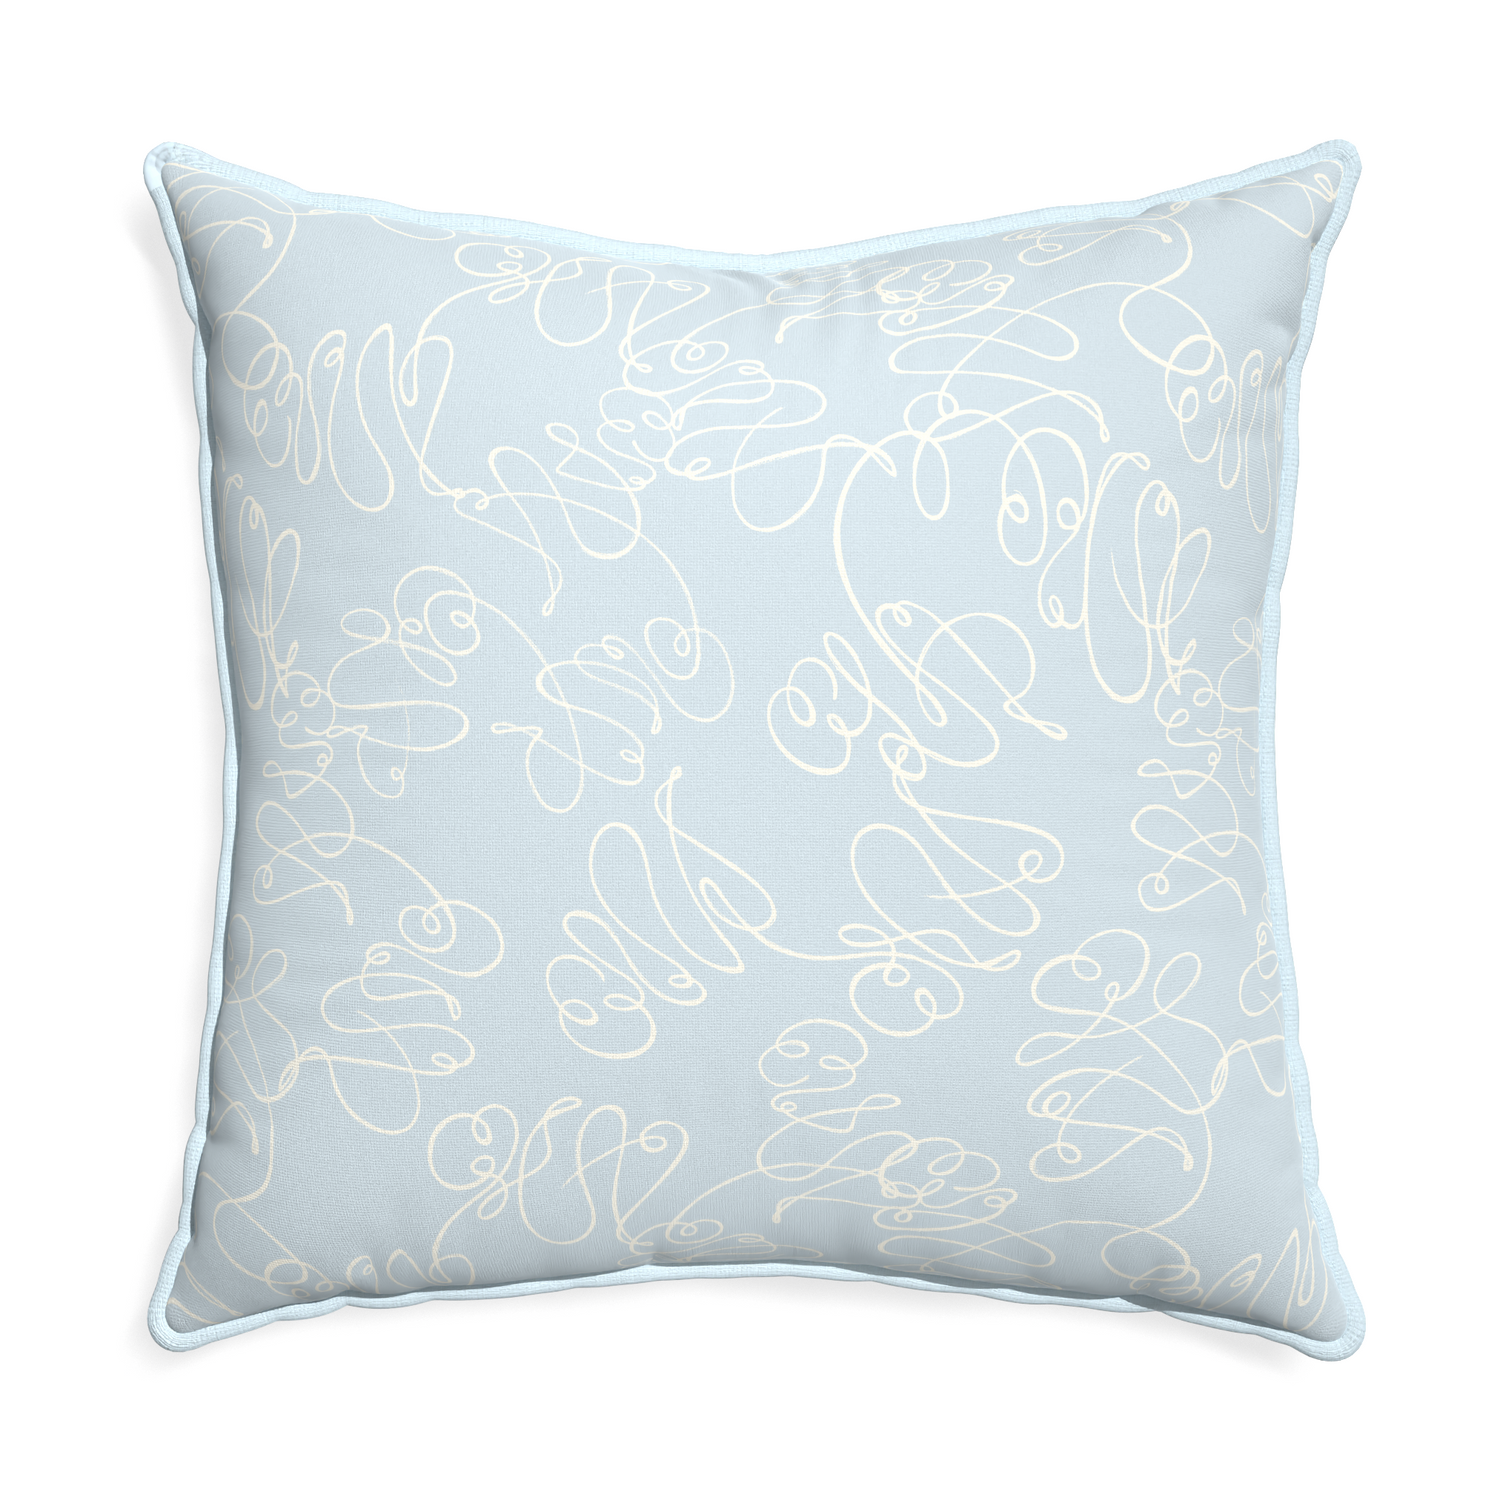 Euro-sham mirabella custom pillow with powder piping on white background